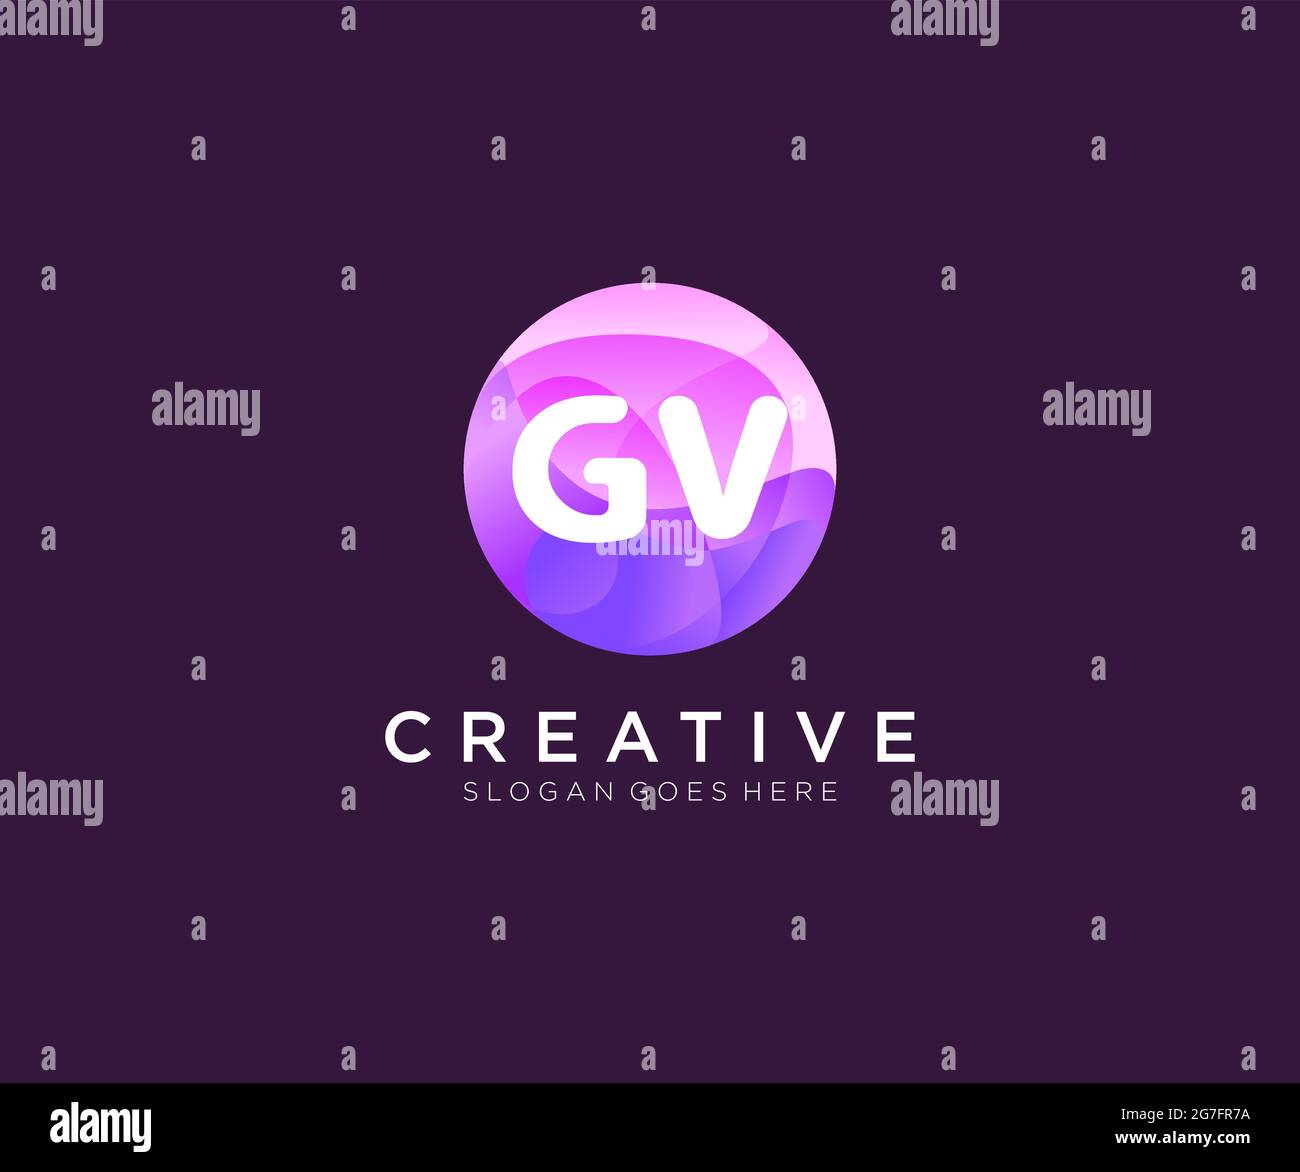 Gv Logo Design